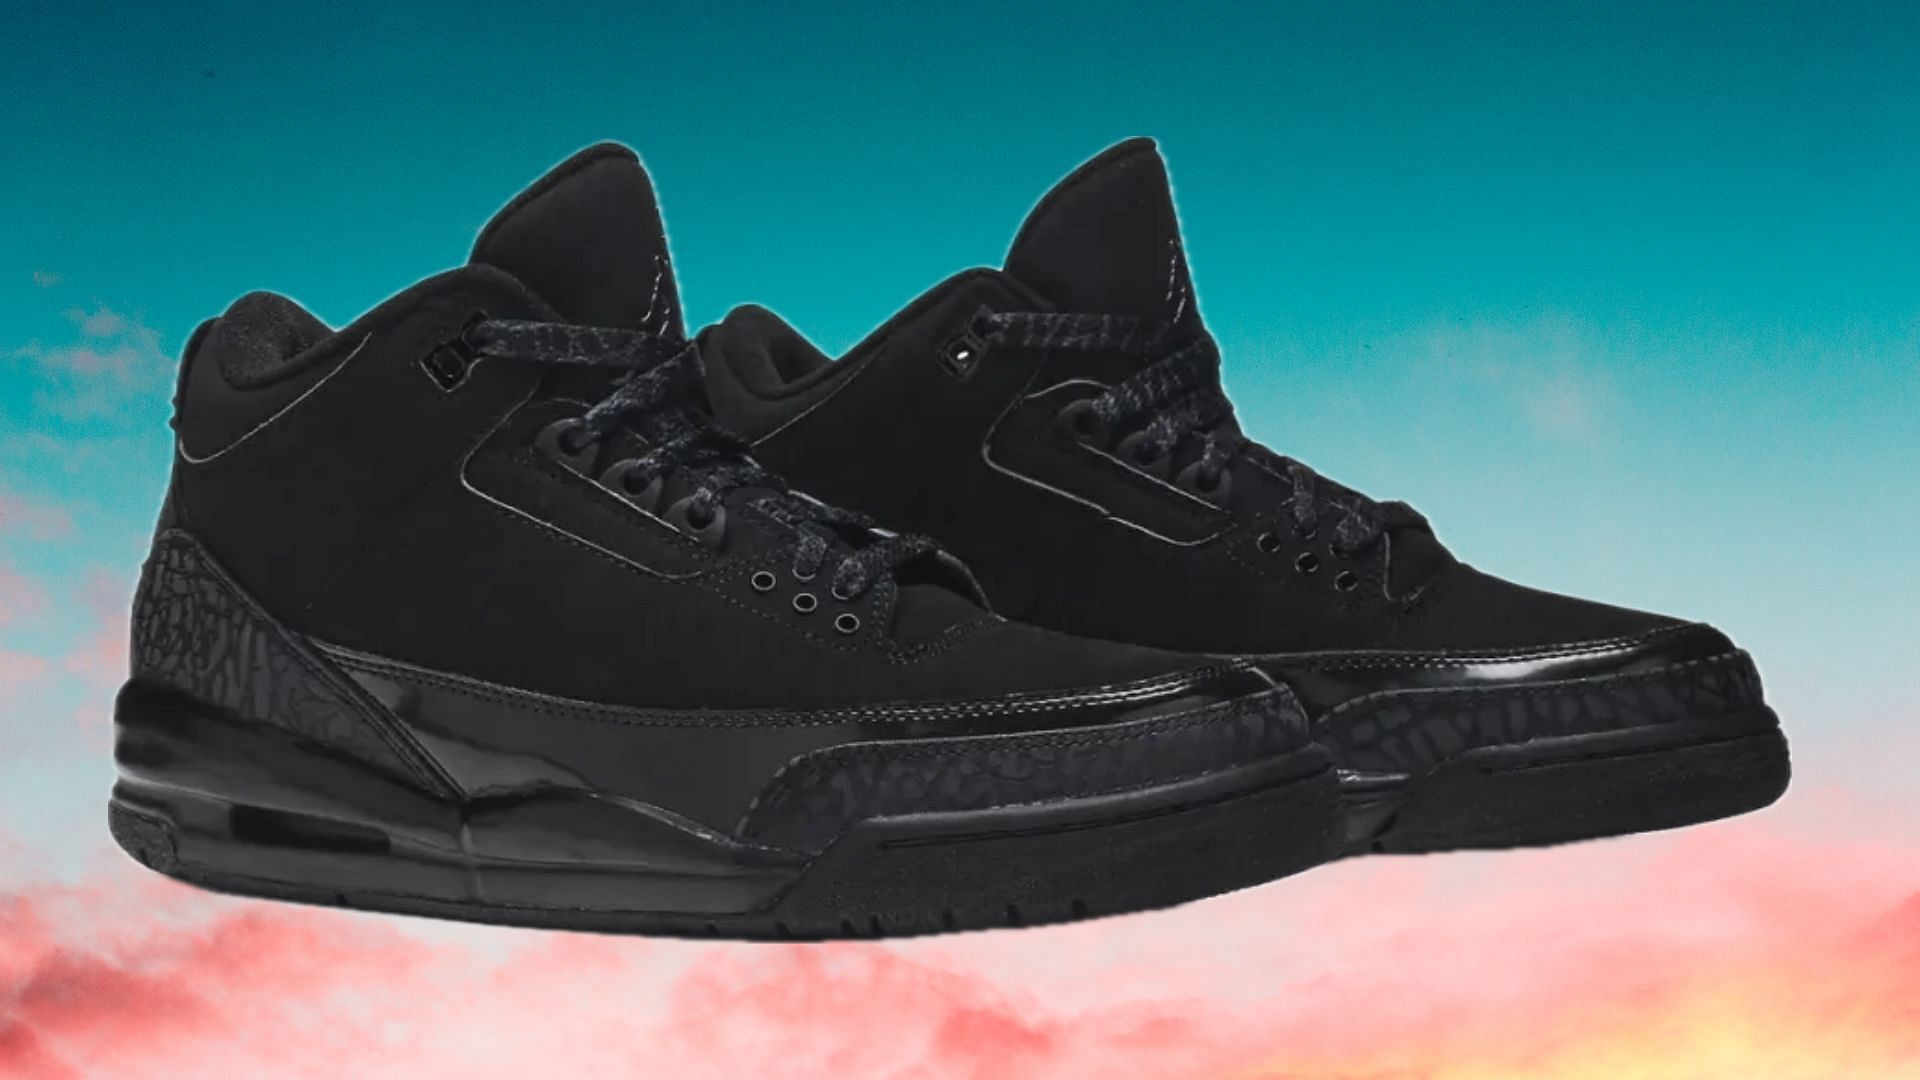 Air Jordan 3 Black Cat sneakers (Image via Instagram/@zsneakerheadz)